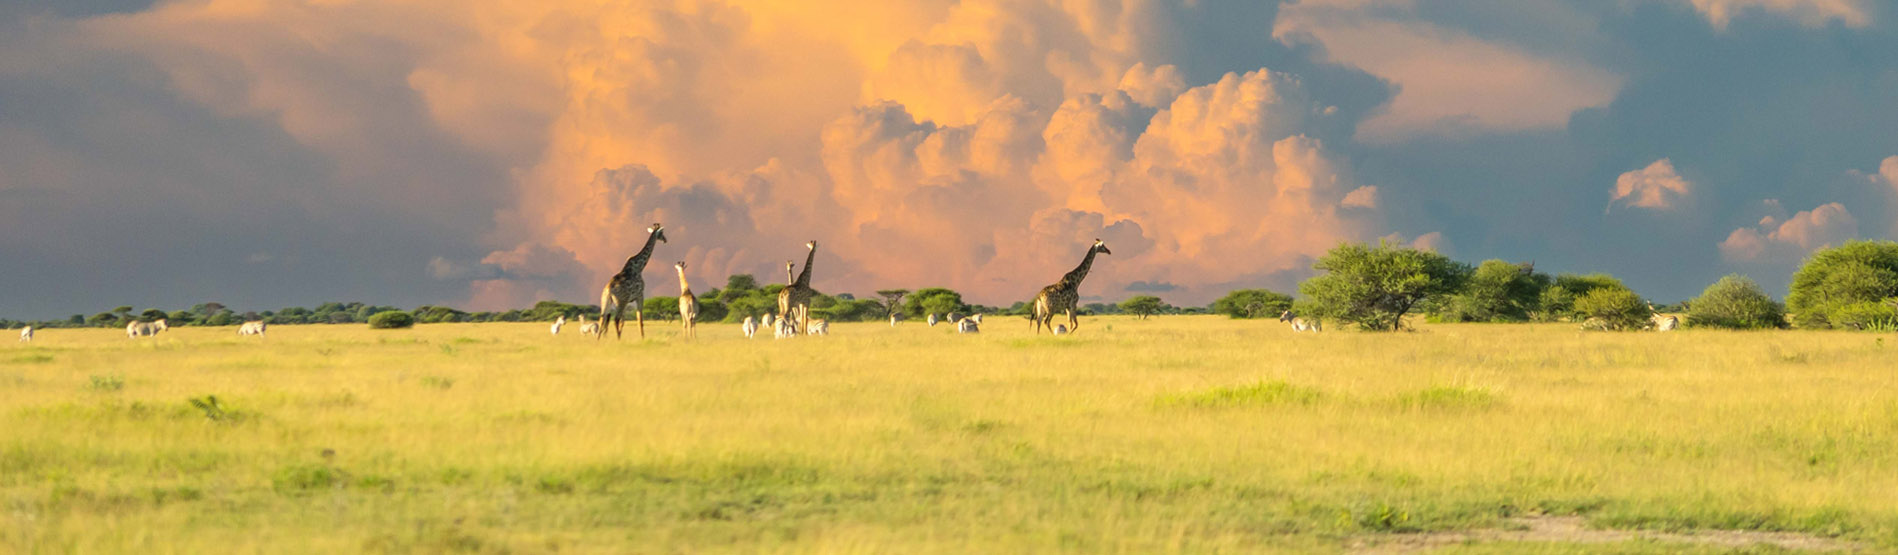 Image of a field full of giraffes